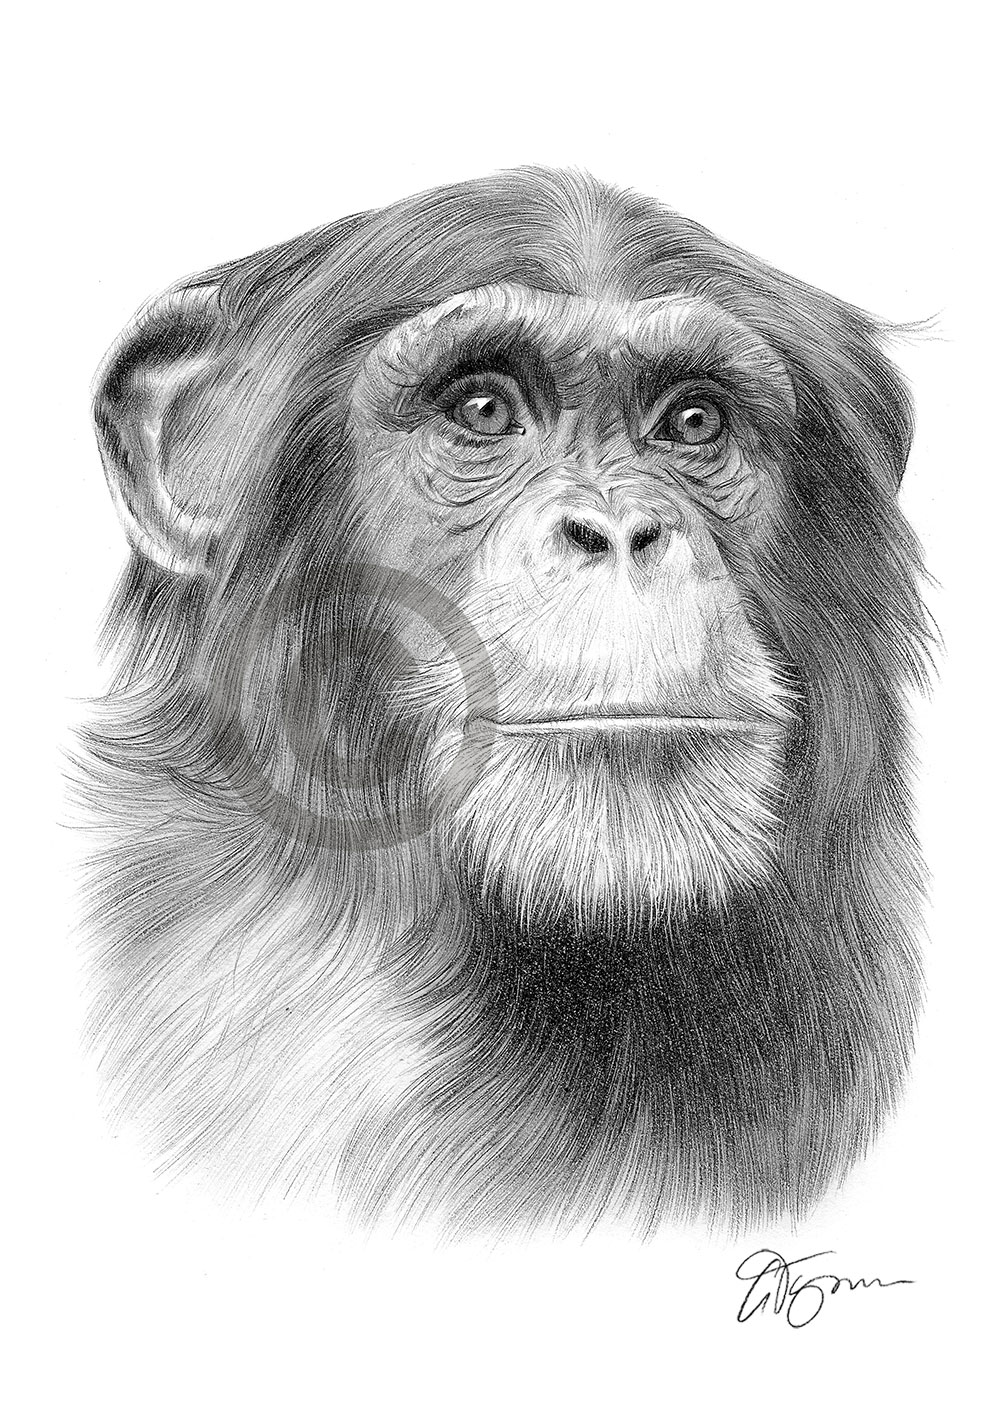 Pencil drawing of a chimpanzee by artist Gary Tymon